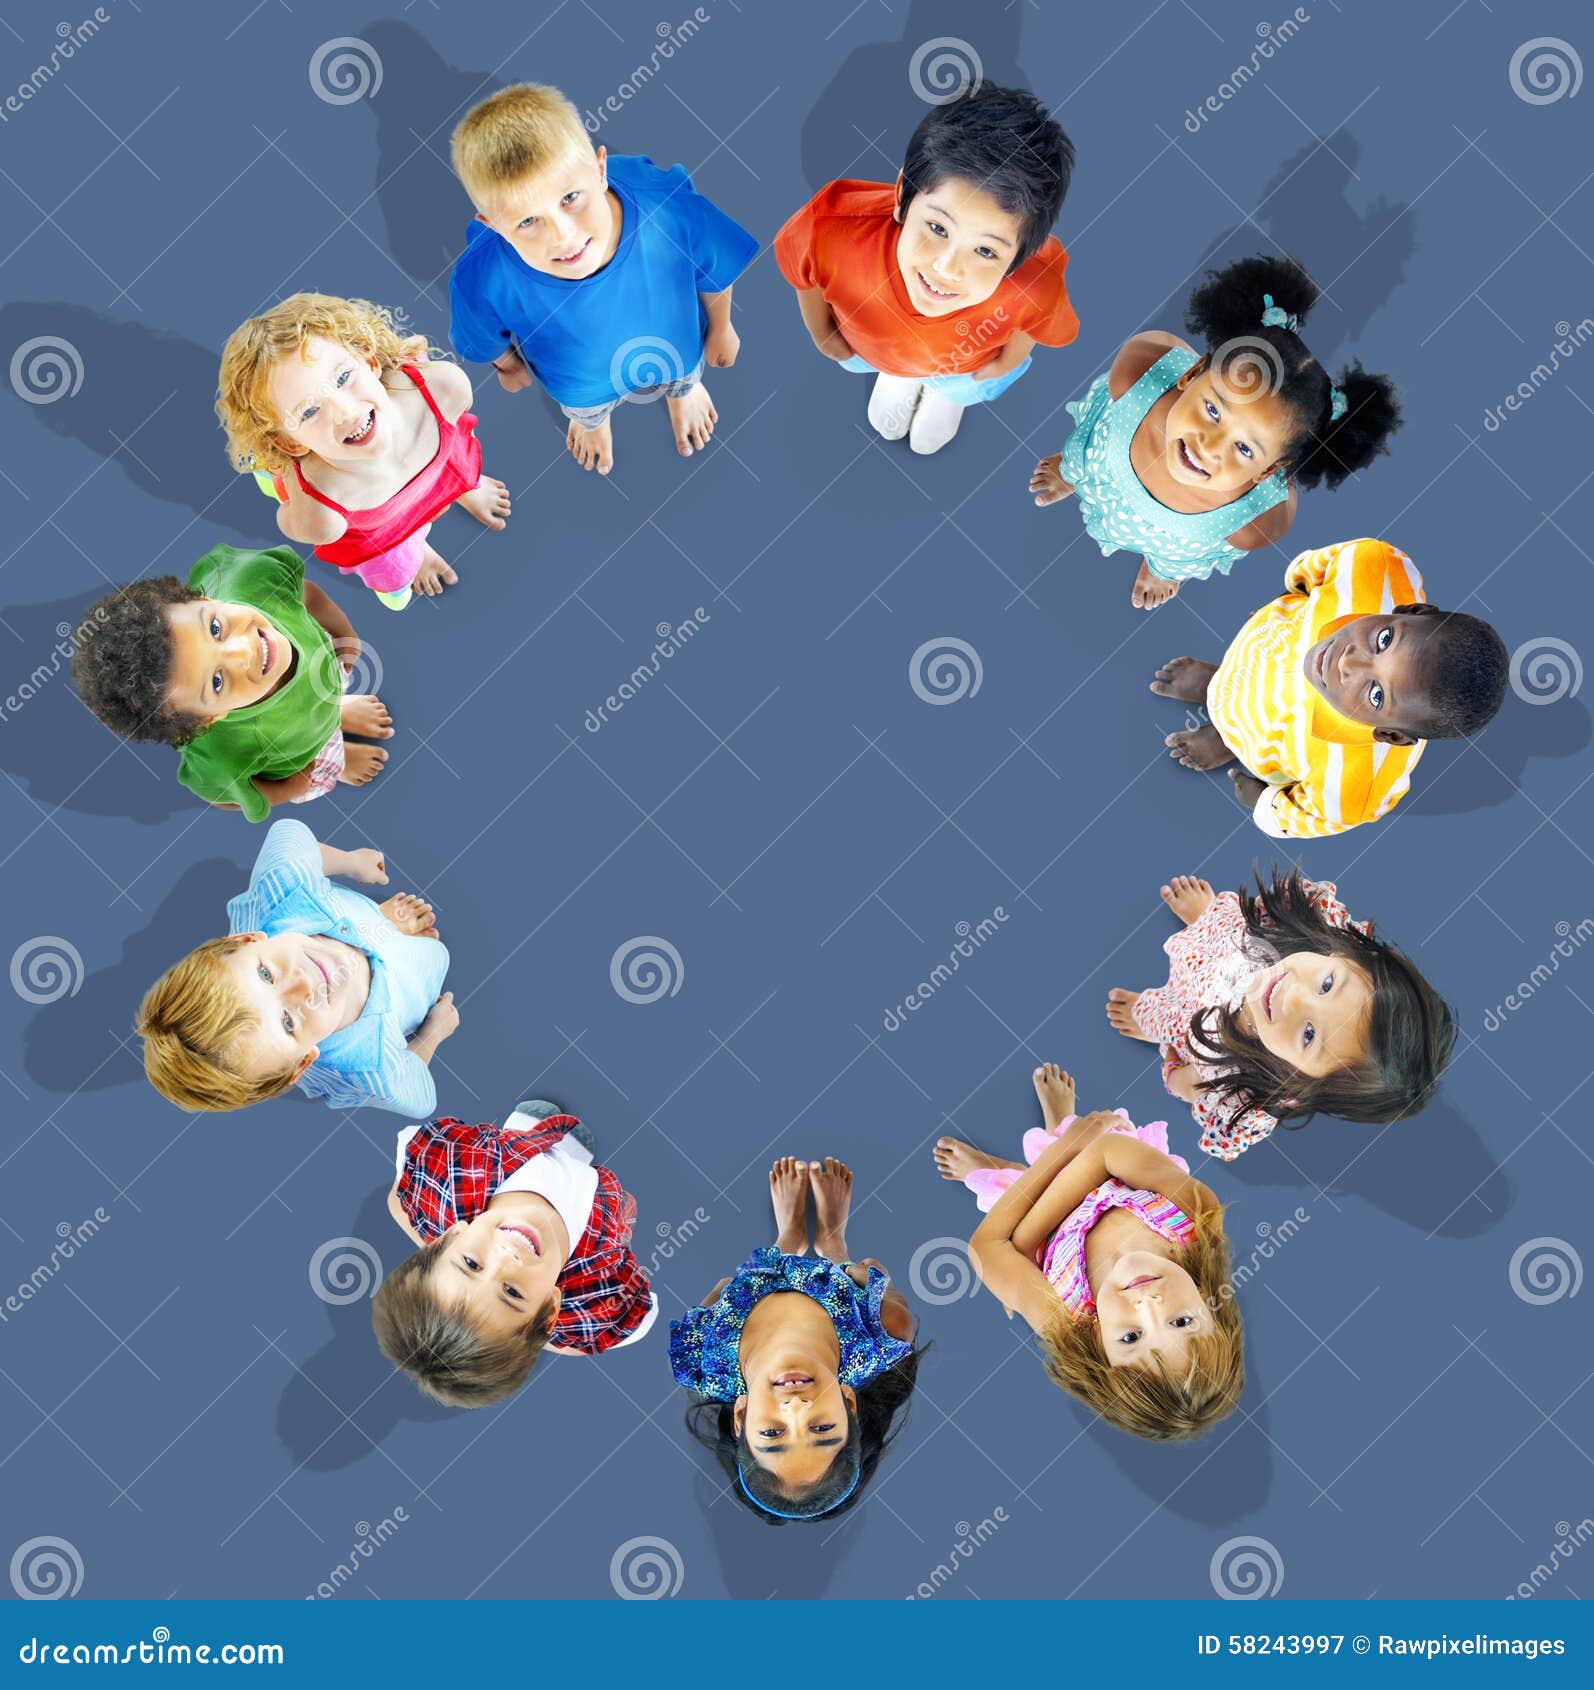 multiethnic children smiling happiness friendship concept